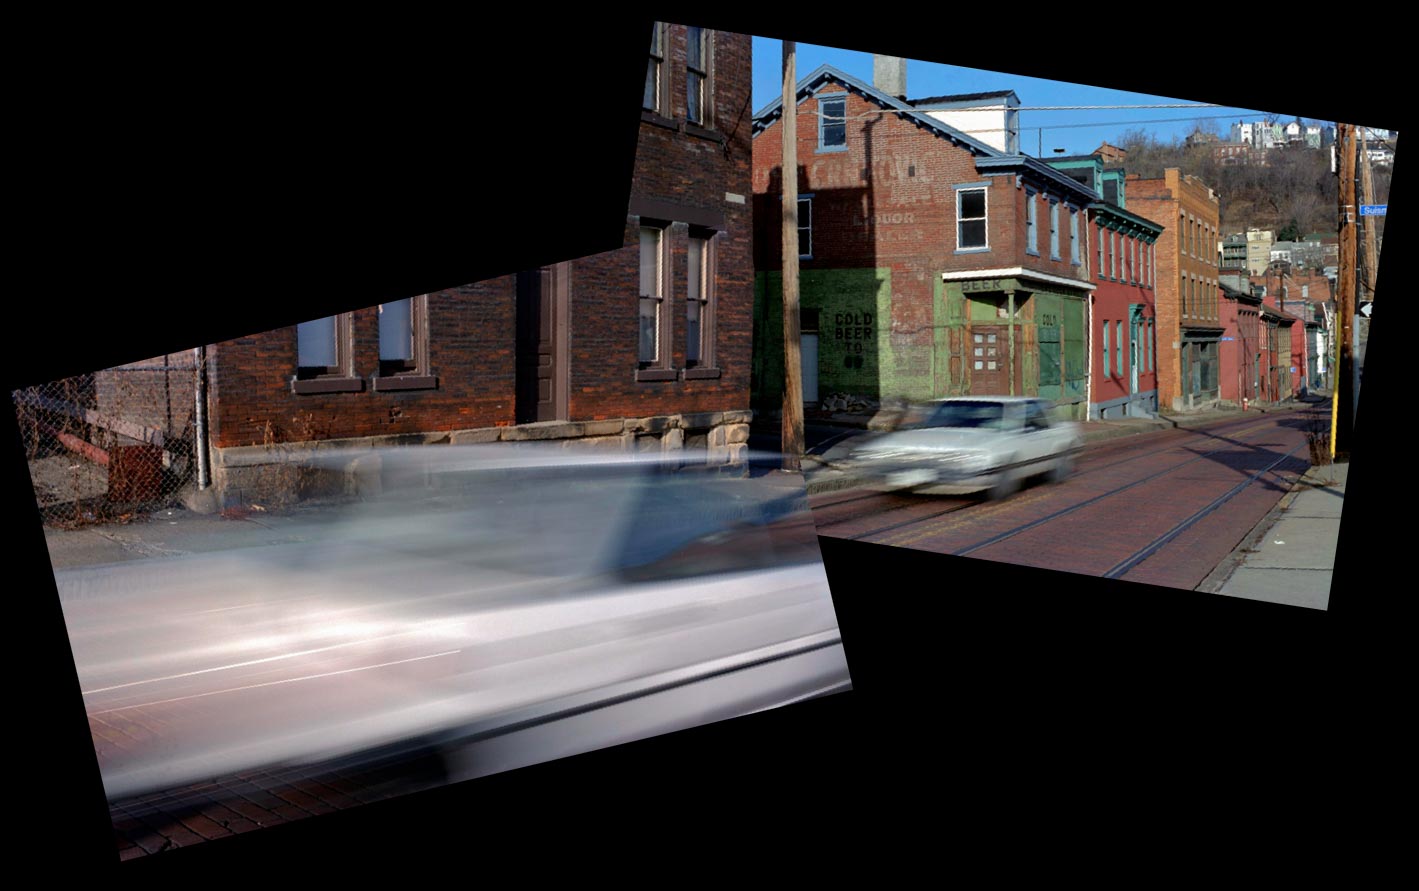  Speeding Car, North Side Pittsburgh Pennsylvania, Retinal Memories Series  1989, Contemporary Art Photography,  Sequence Photography, Street Photography, Color Film Photography